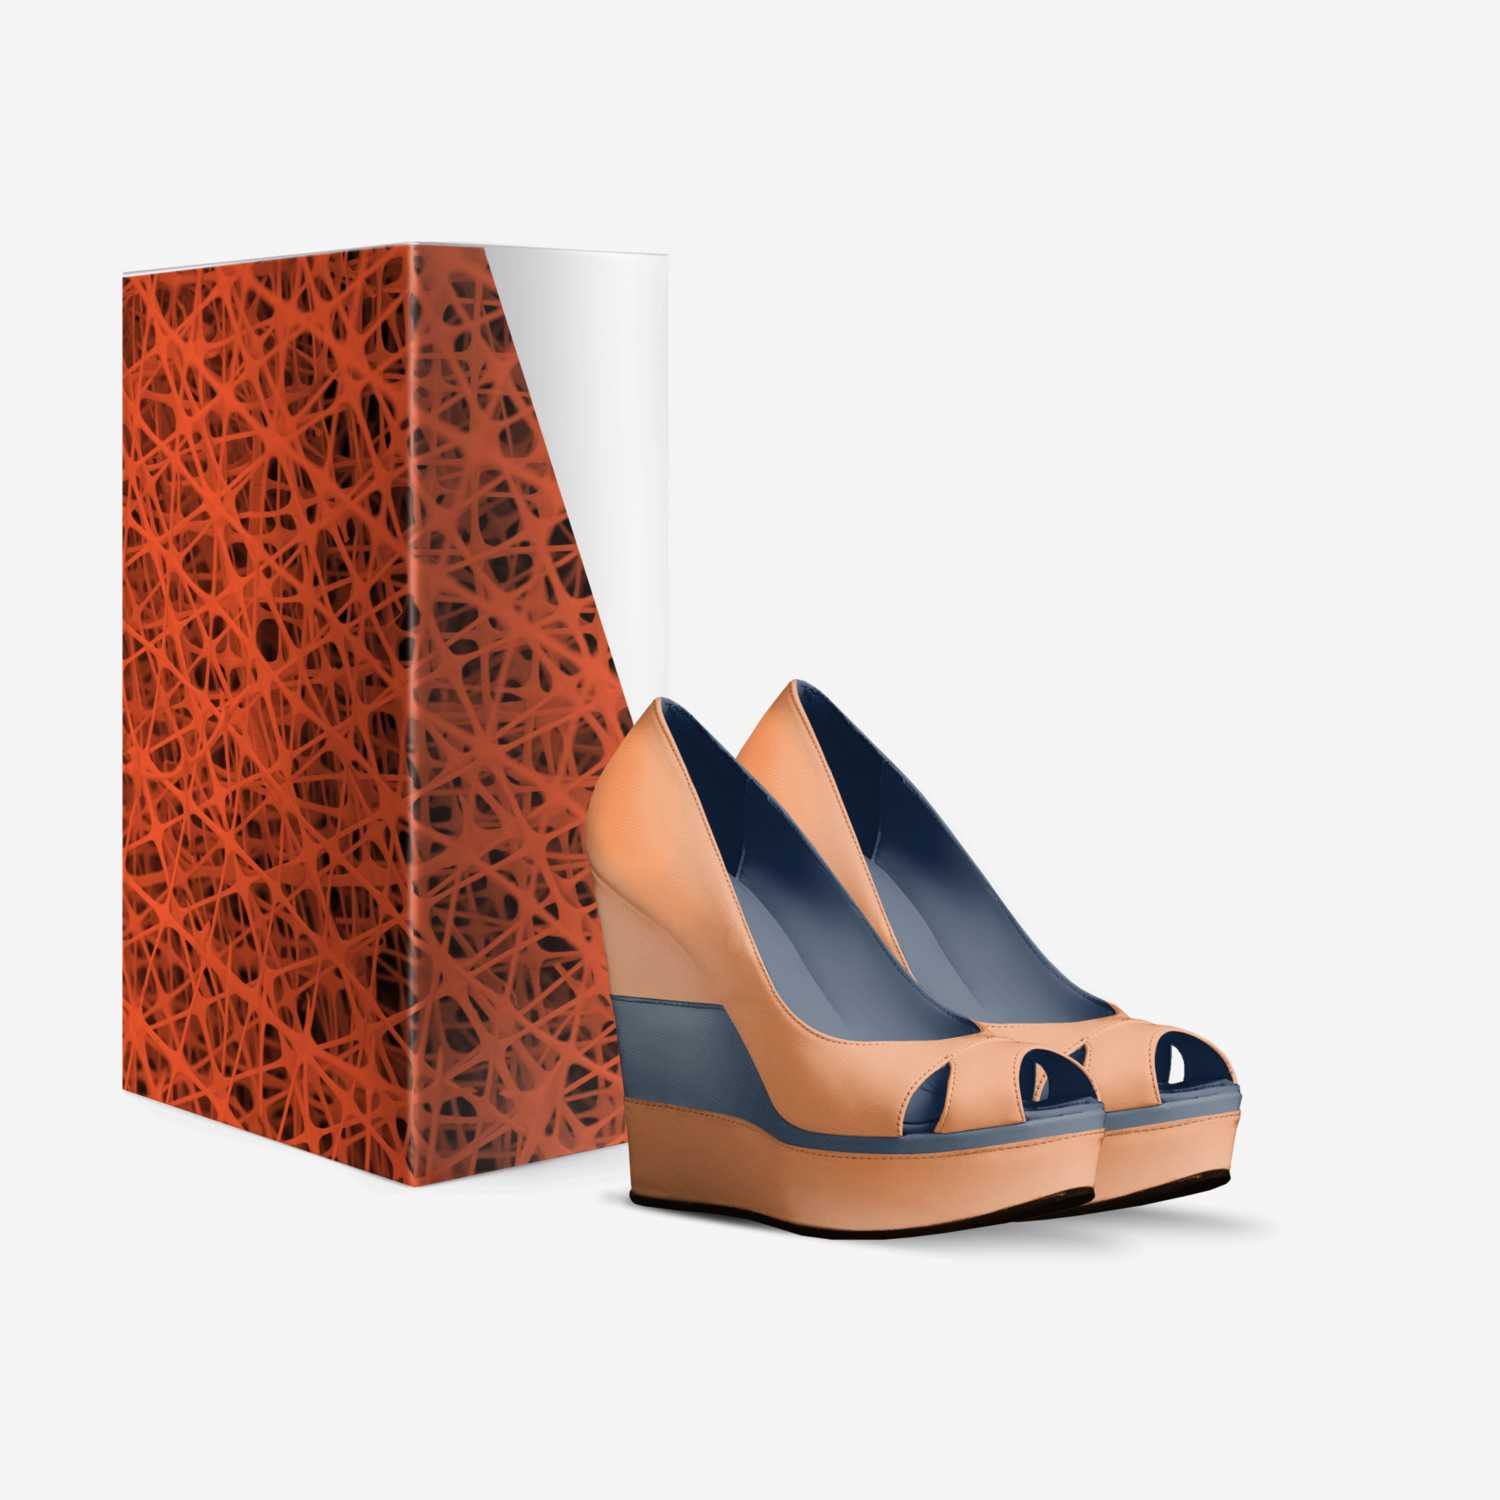 Wisetoes custom made in Italy shoes by Sherri Wiseman | Box view